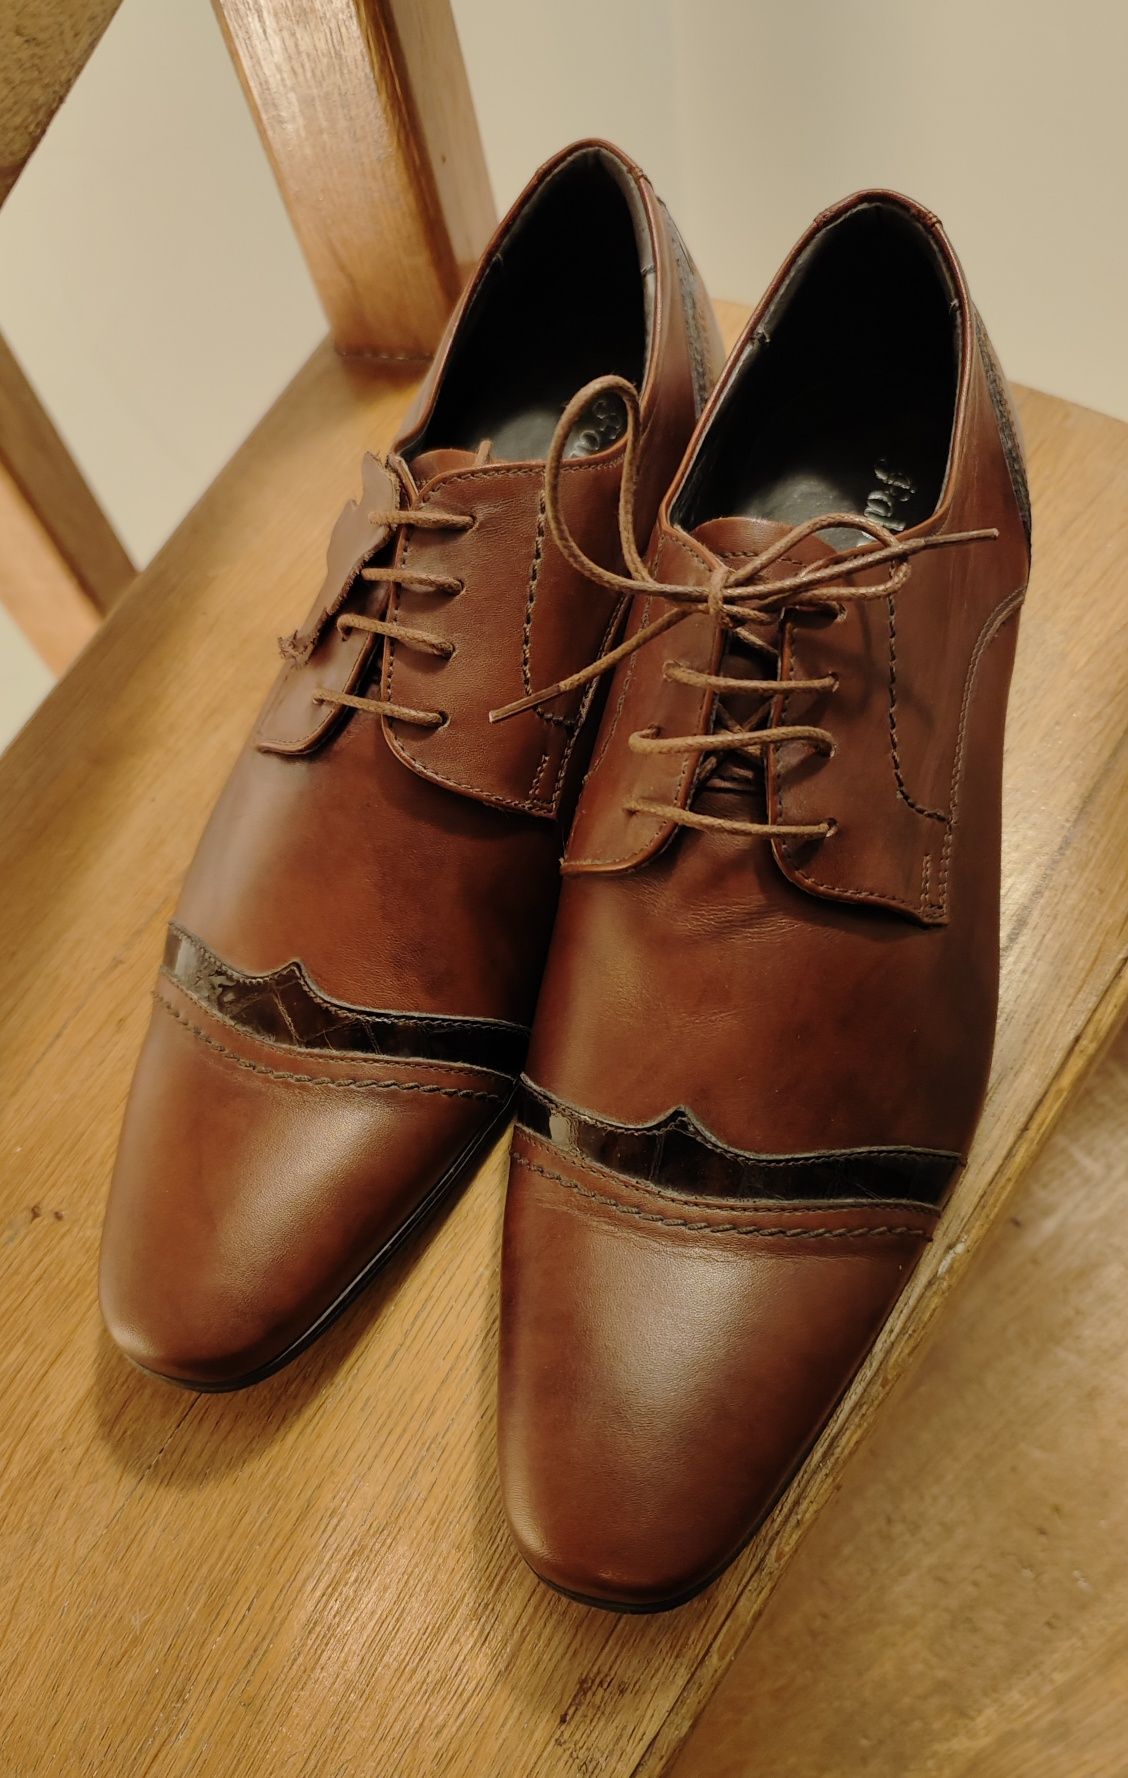 Pantofi piele naturala Fabio Lenzi, noi, fabricați in Romania, 41